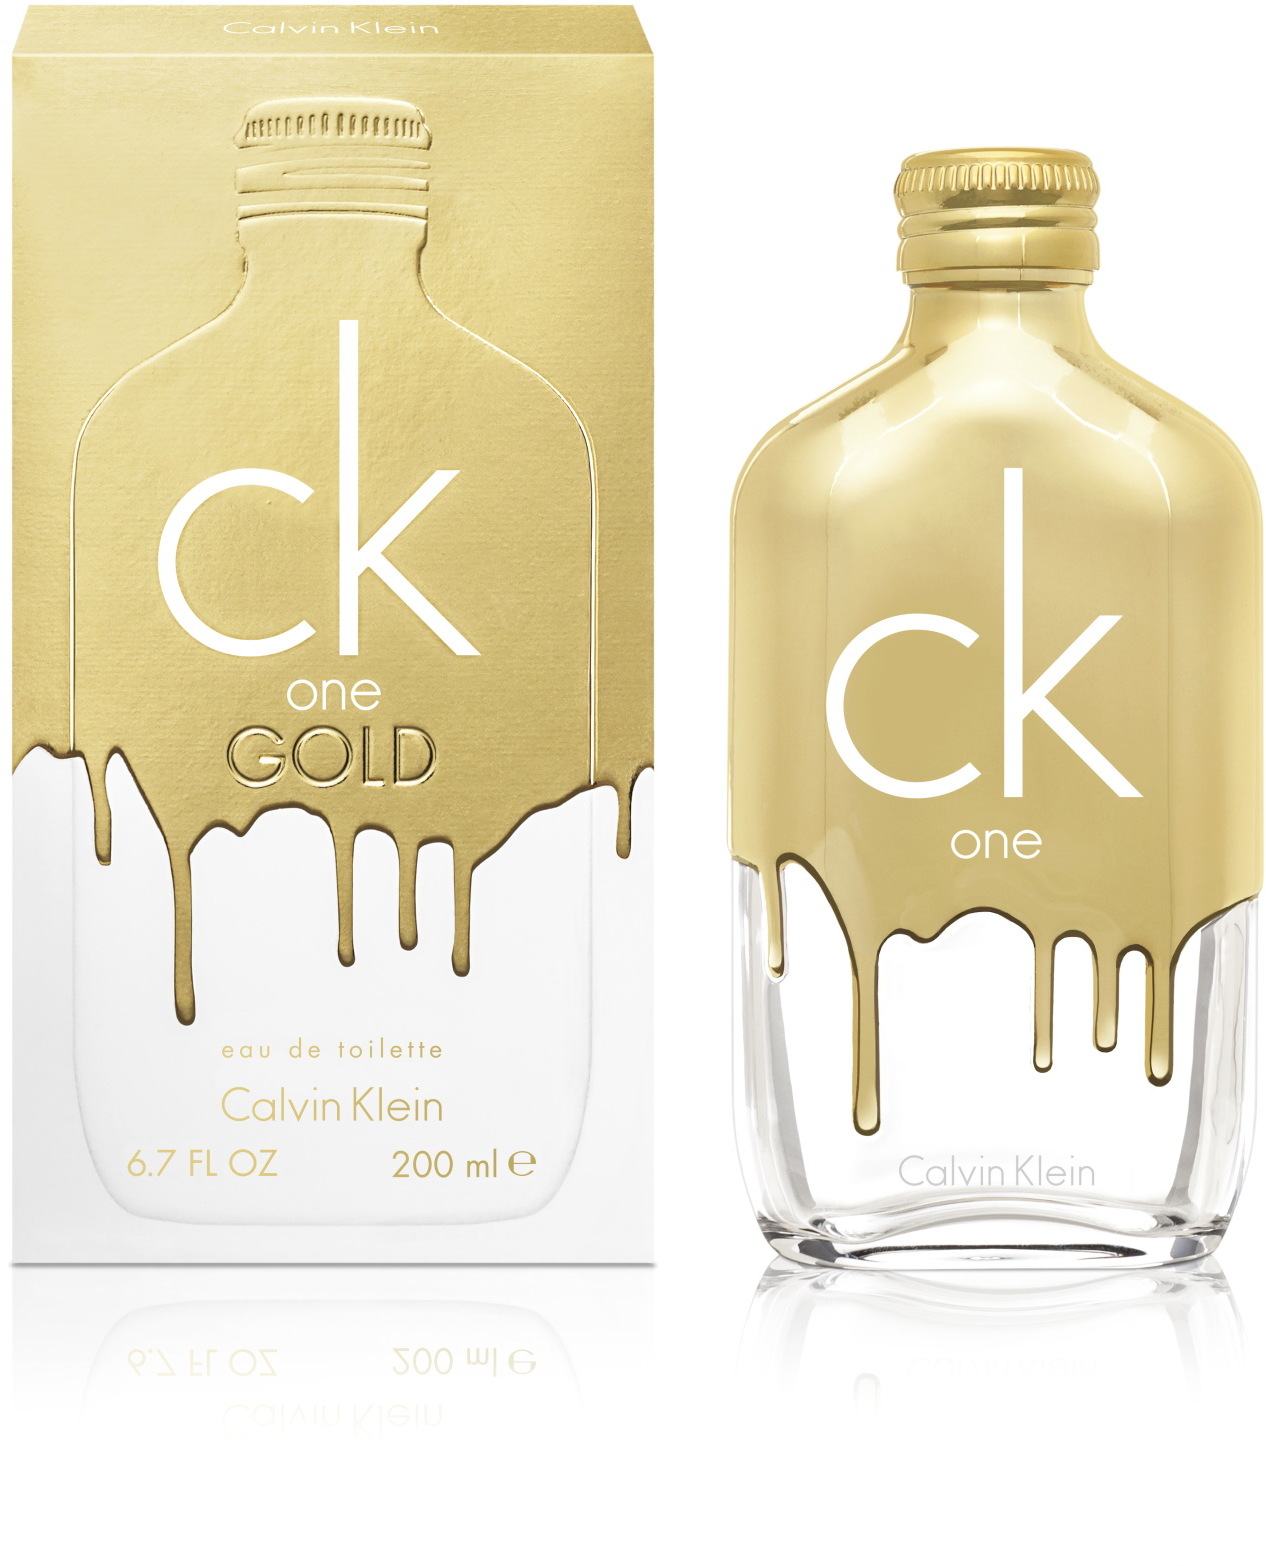 ck one gold perfume